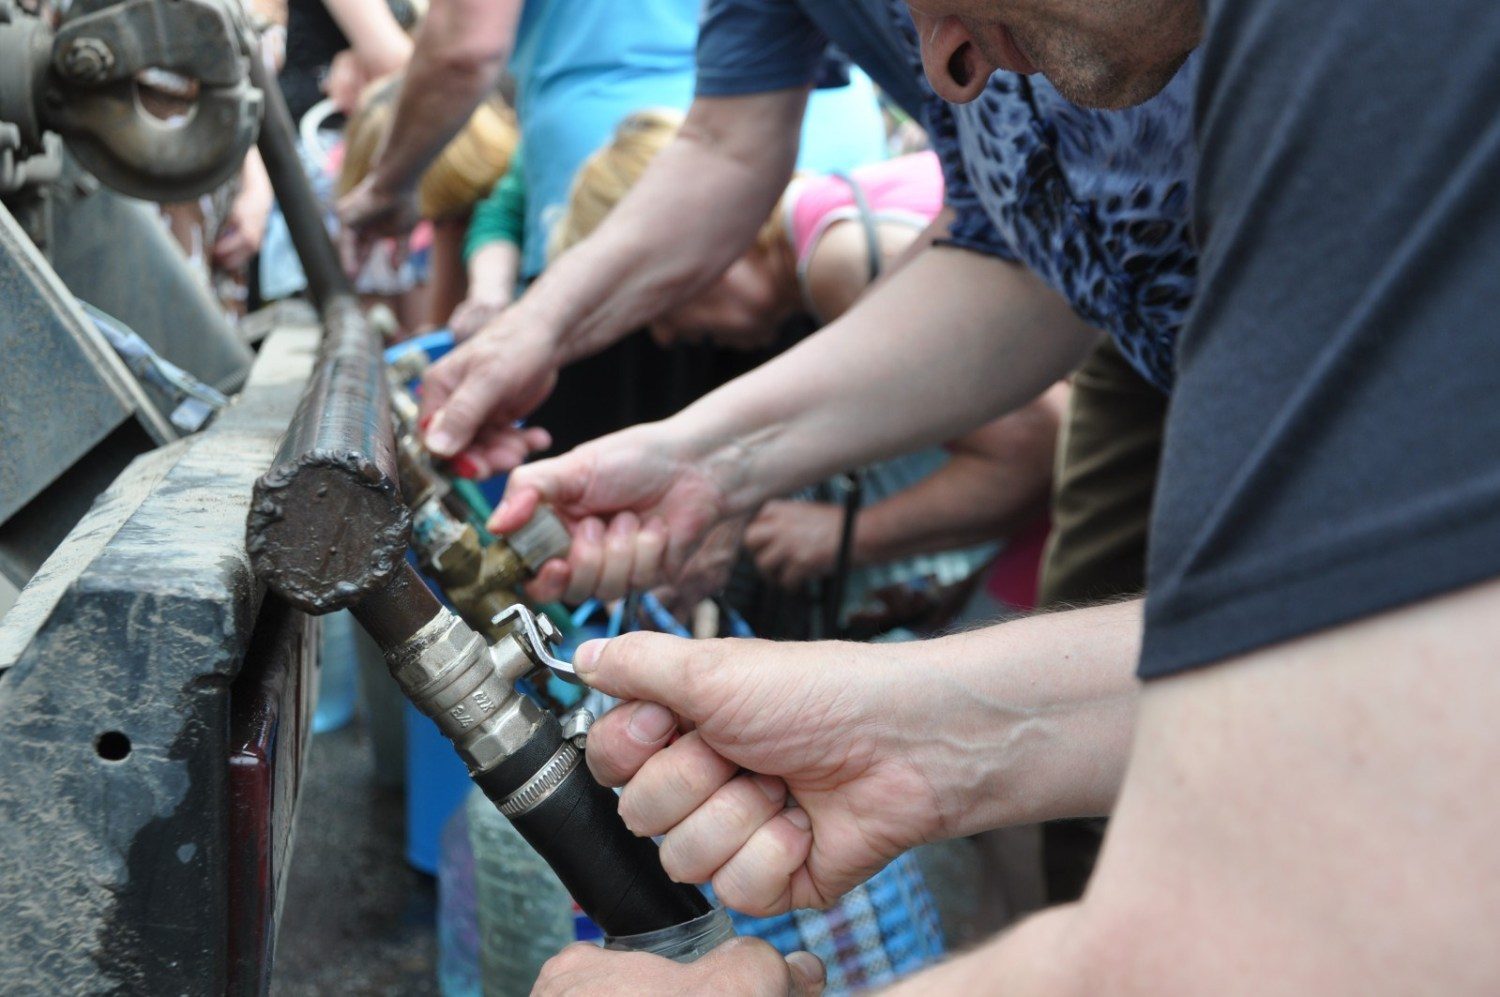 water supply damaged Donbass